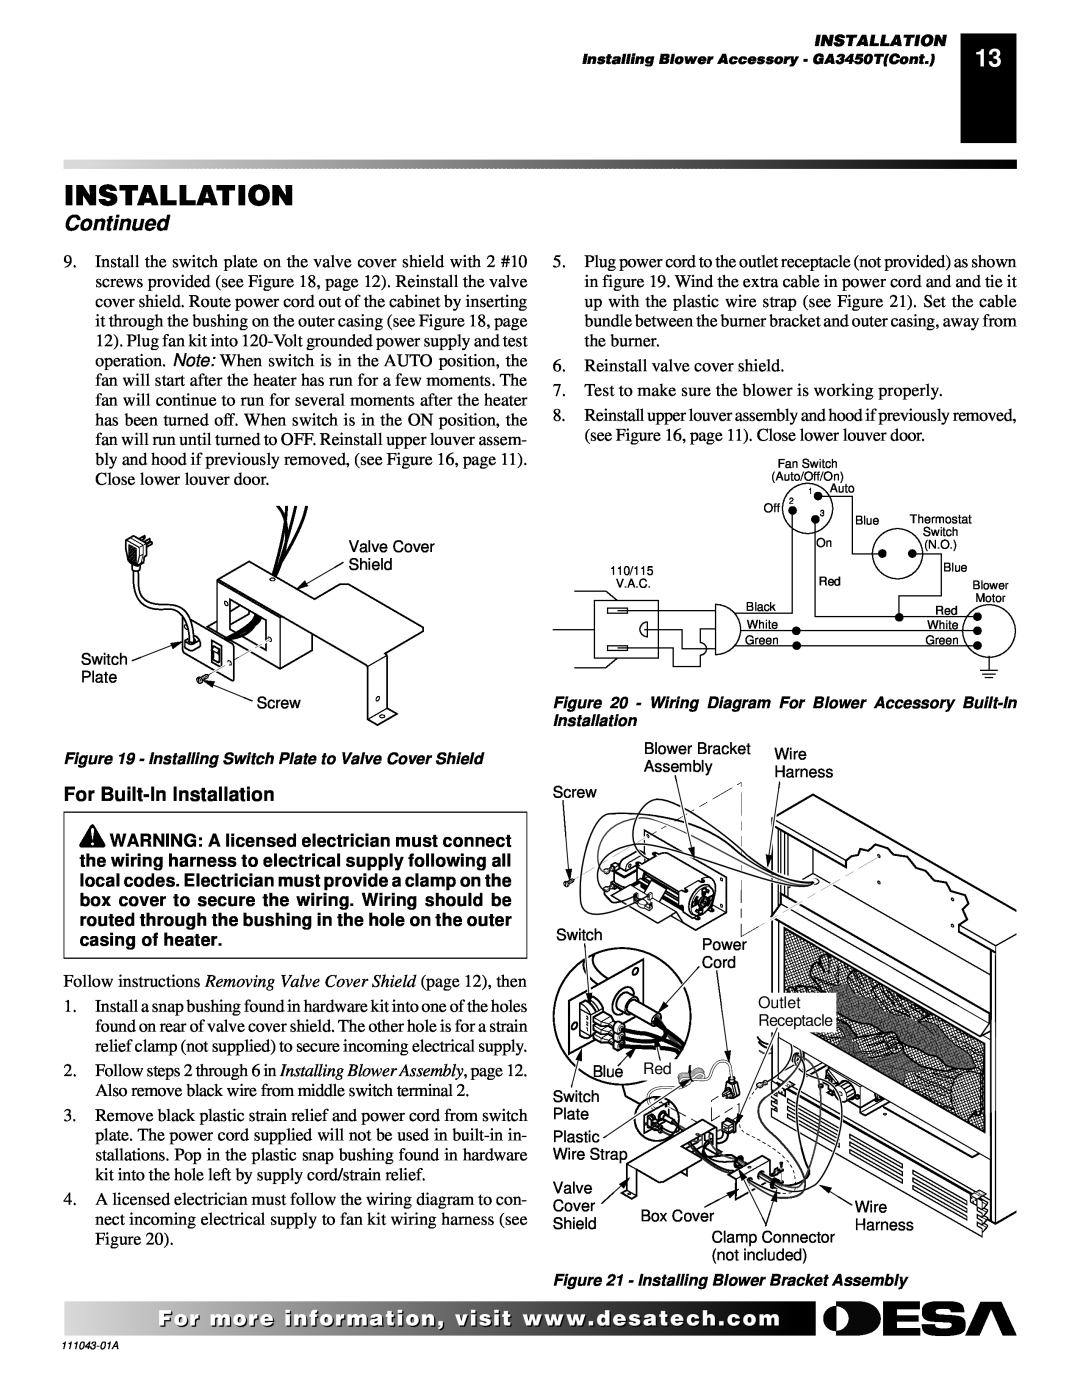 Vanguard Heating WMH26TNB installation manual Continued, For Built-InInstallation 